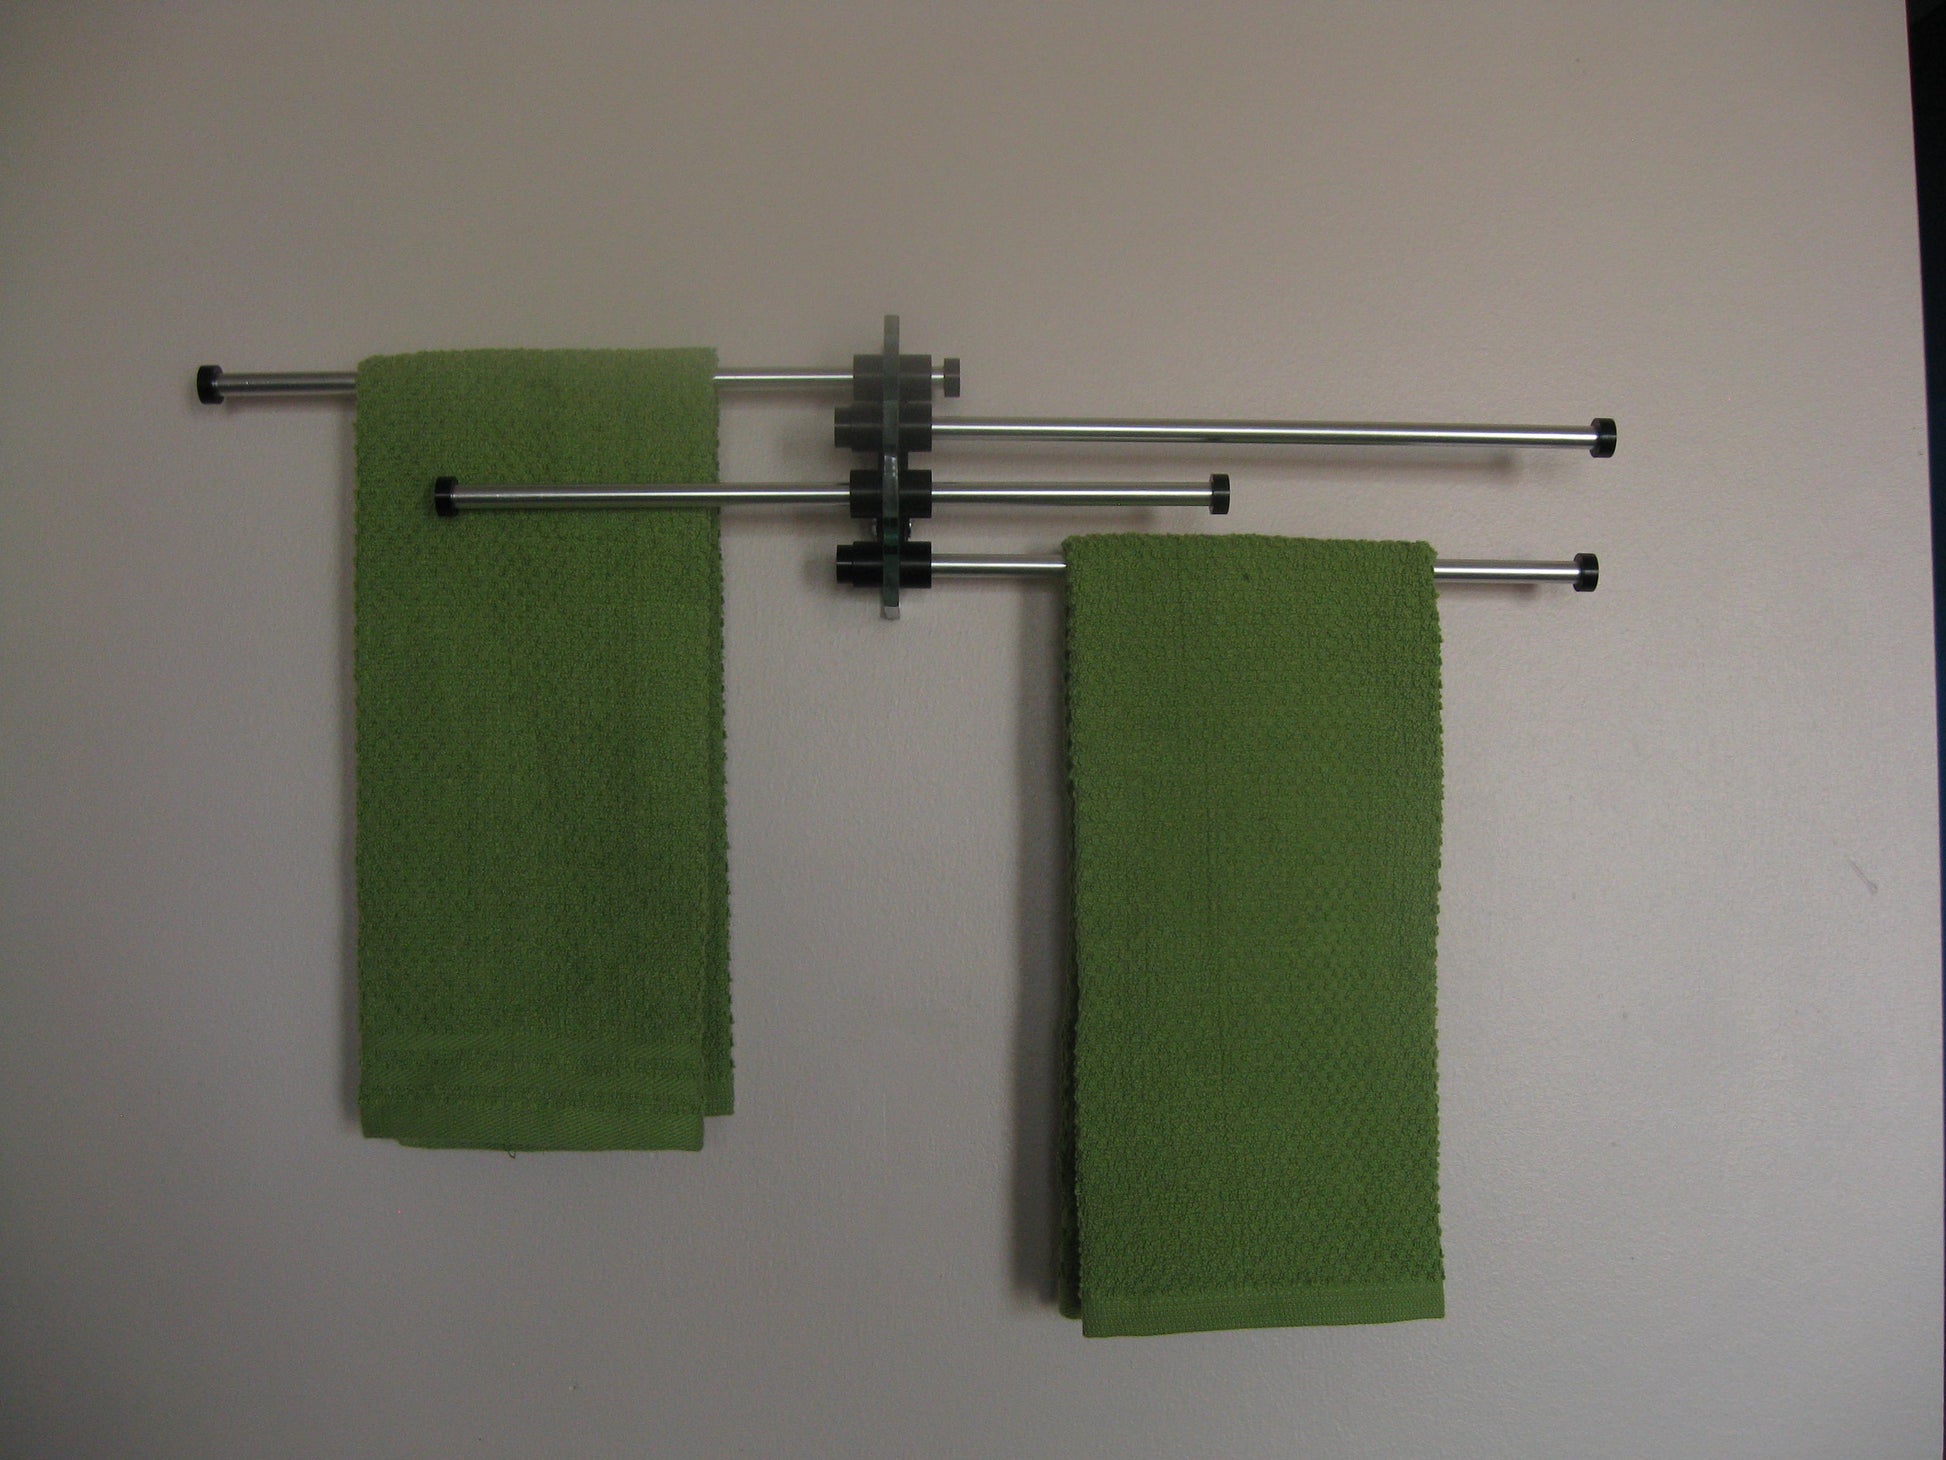 Zojila.com: Serengeti Towel Hanger : 4- 12 inches bar sliding wall mounted towel hanger with glass panel for bathroom & kitchen: Bath & Kitchen